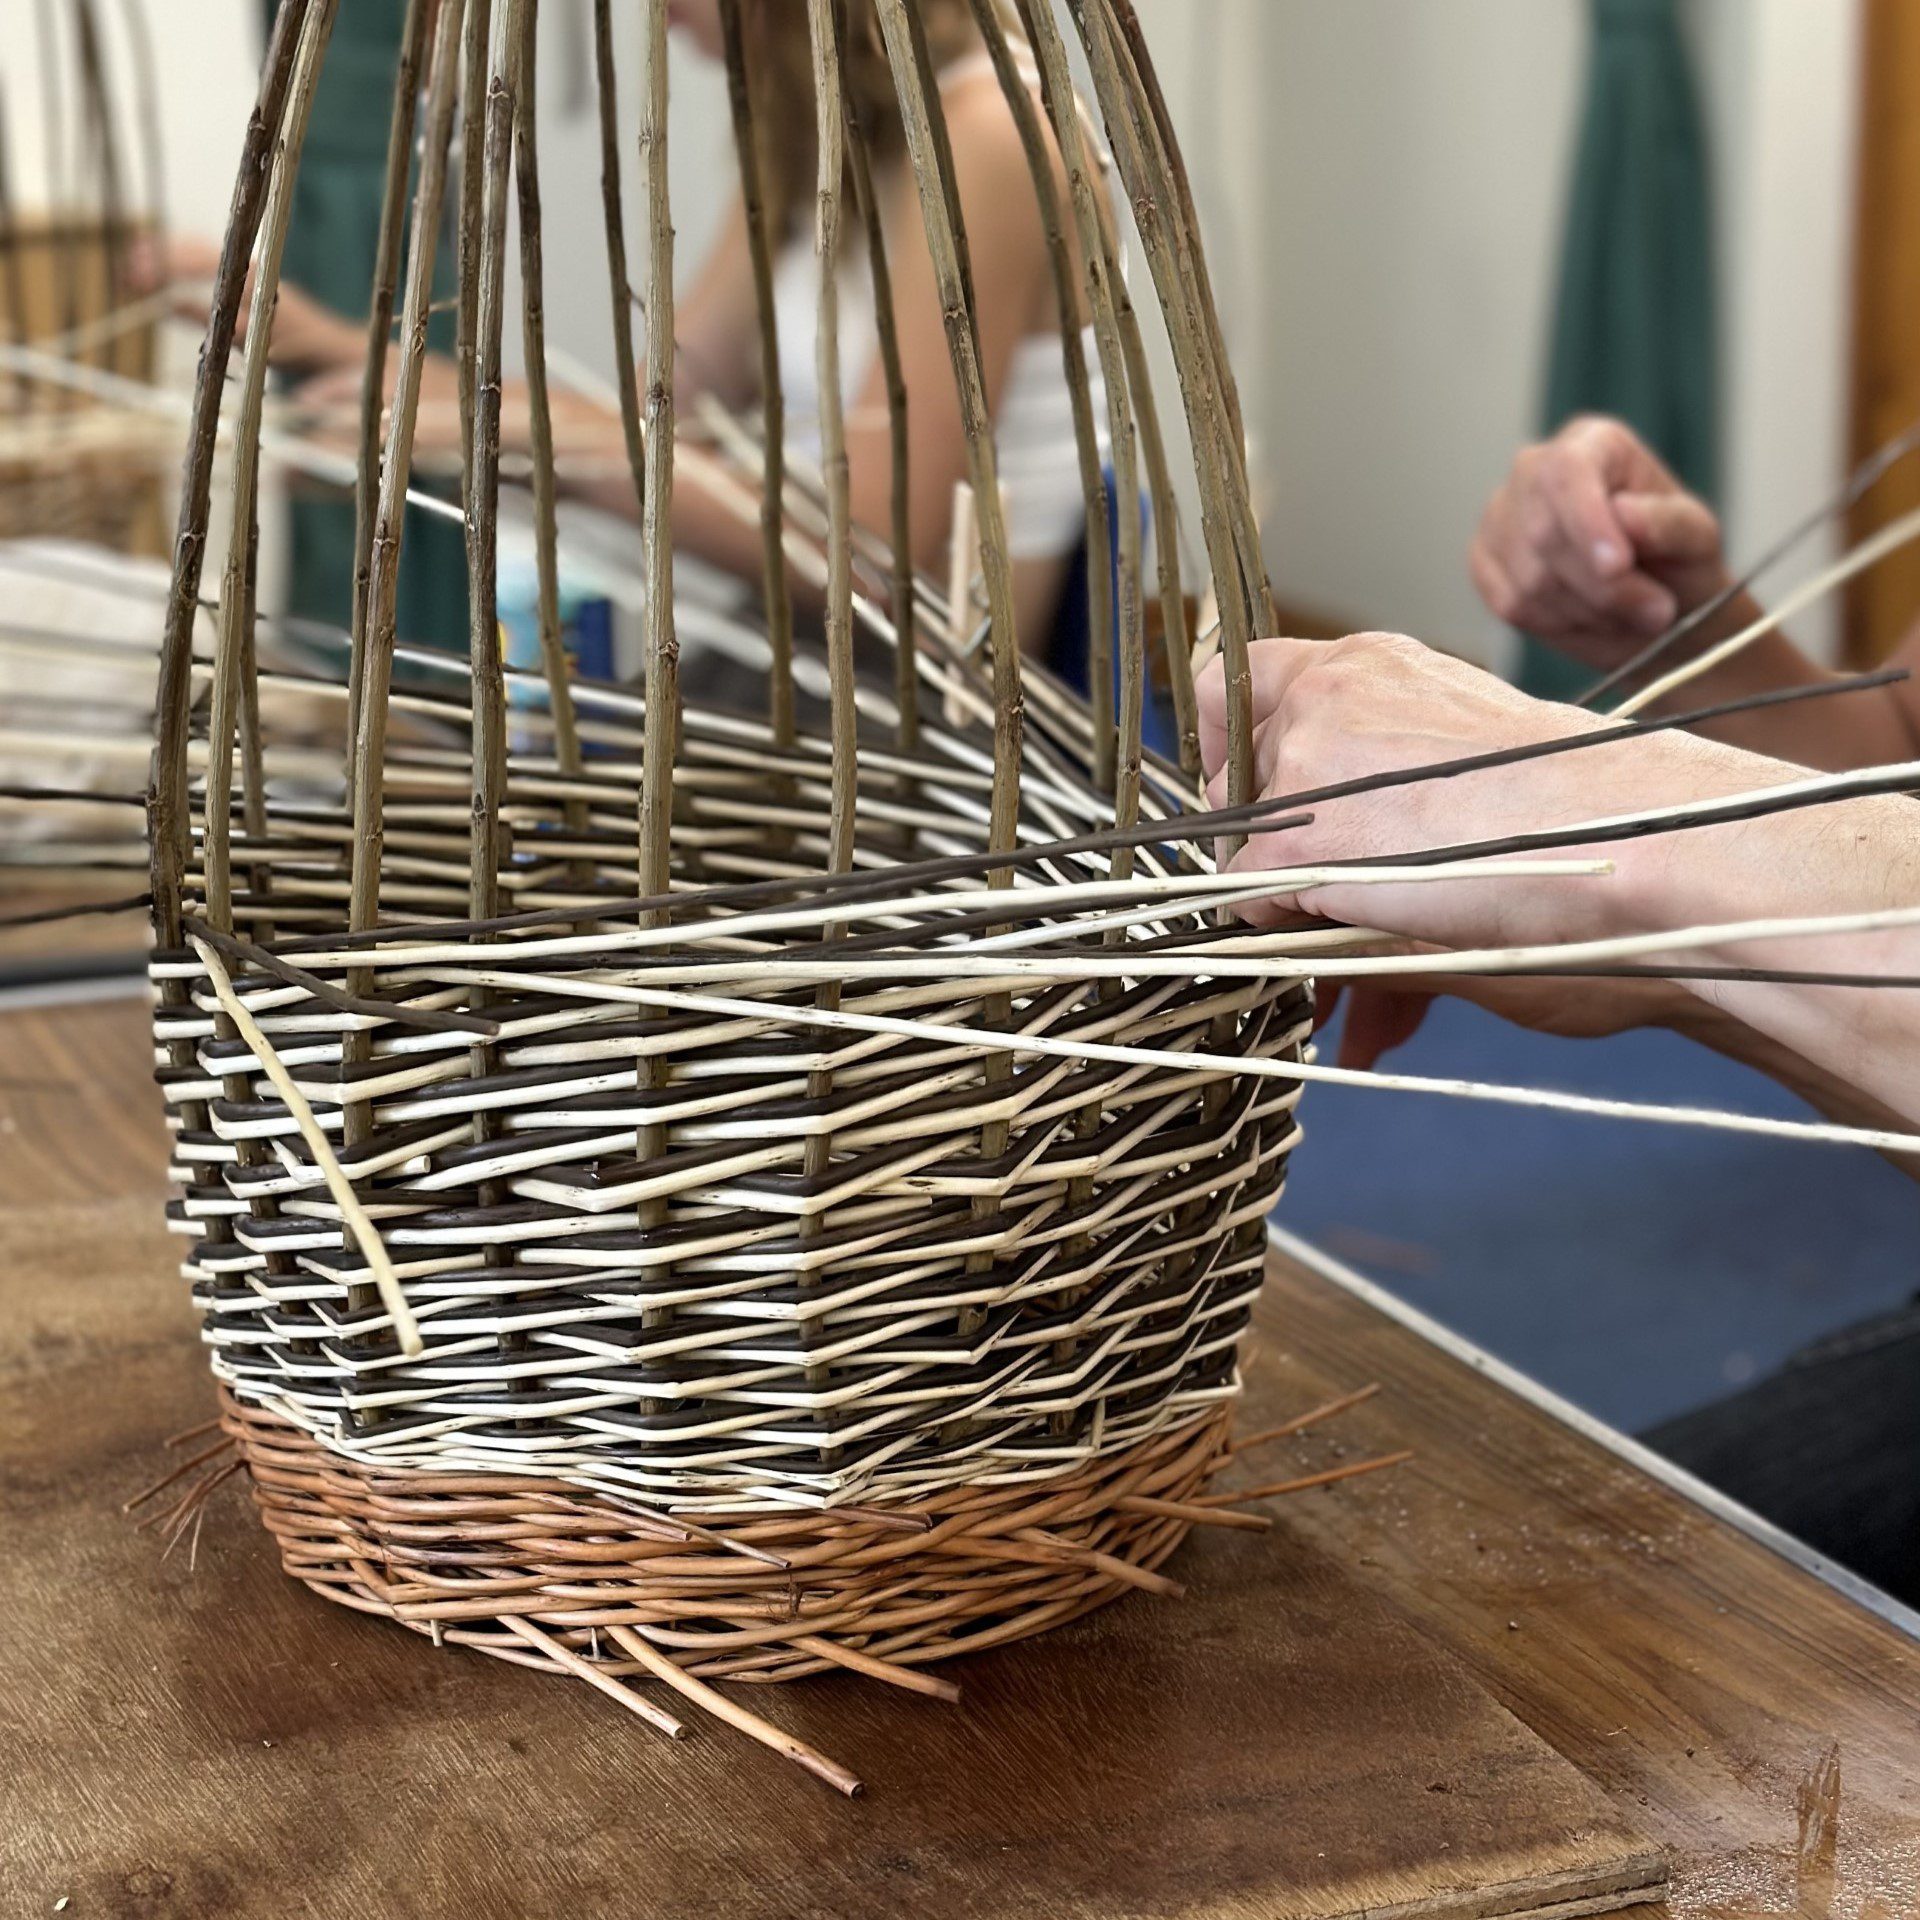 Willow Weaving: Basketry workshop